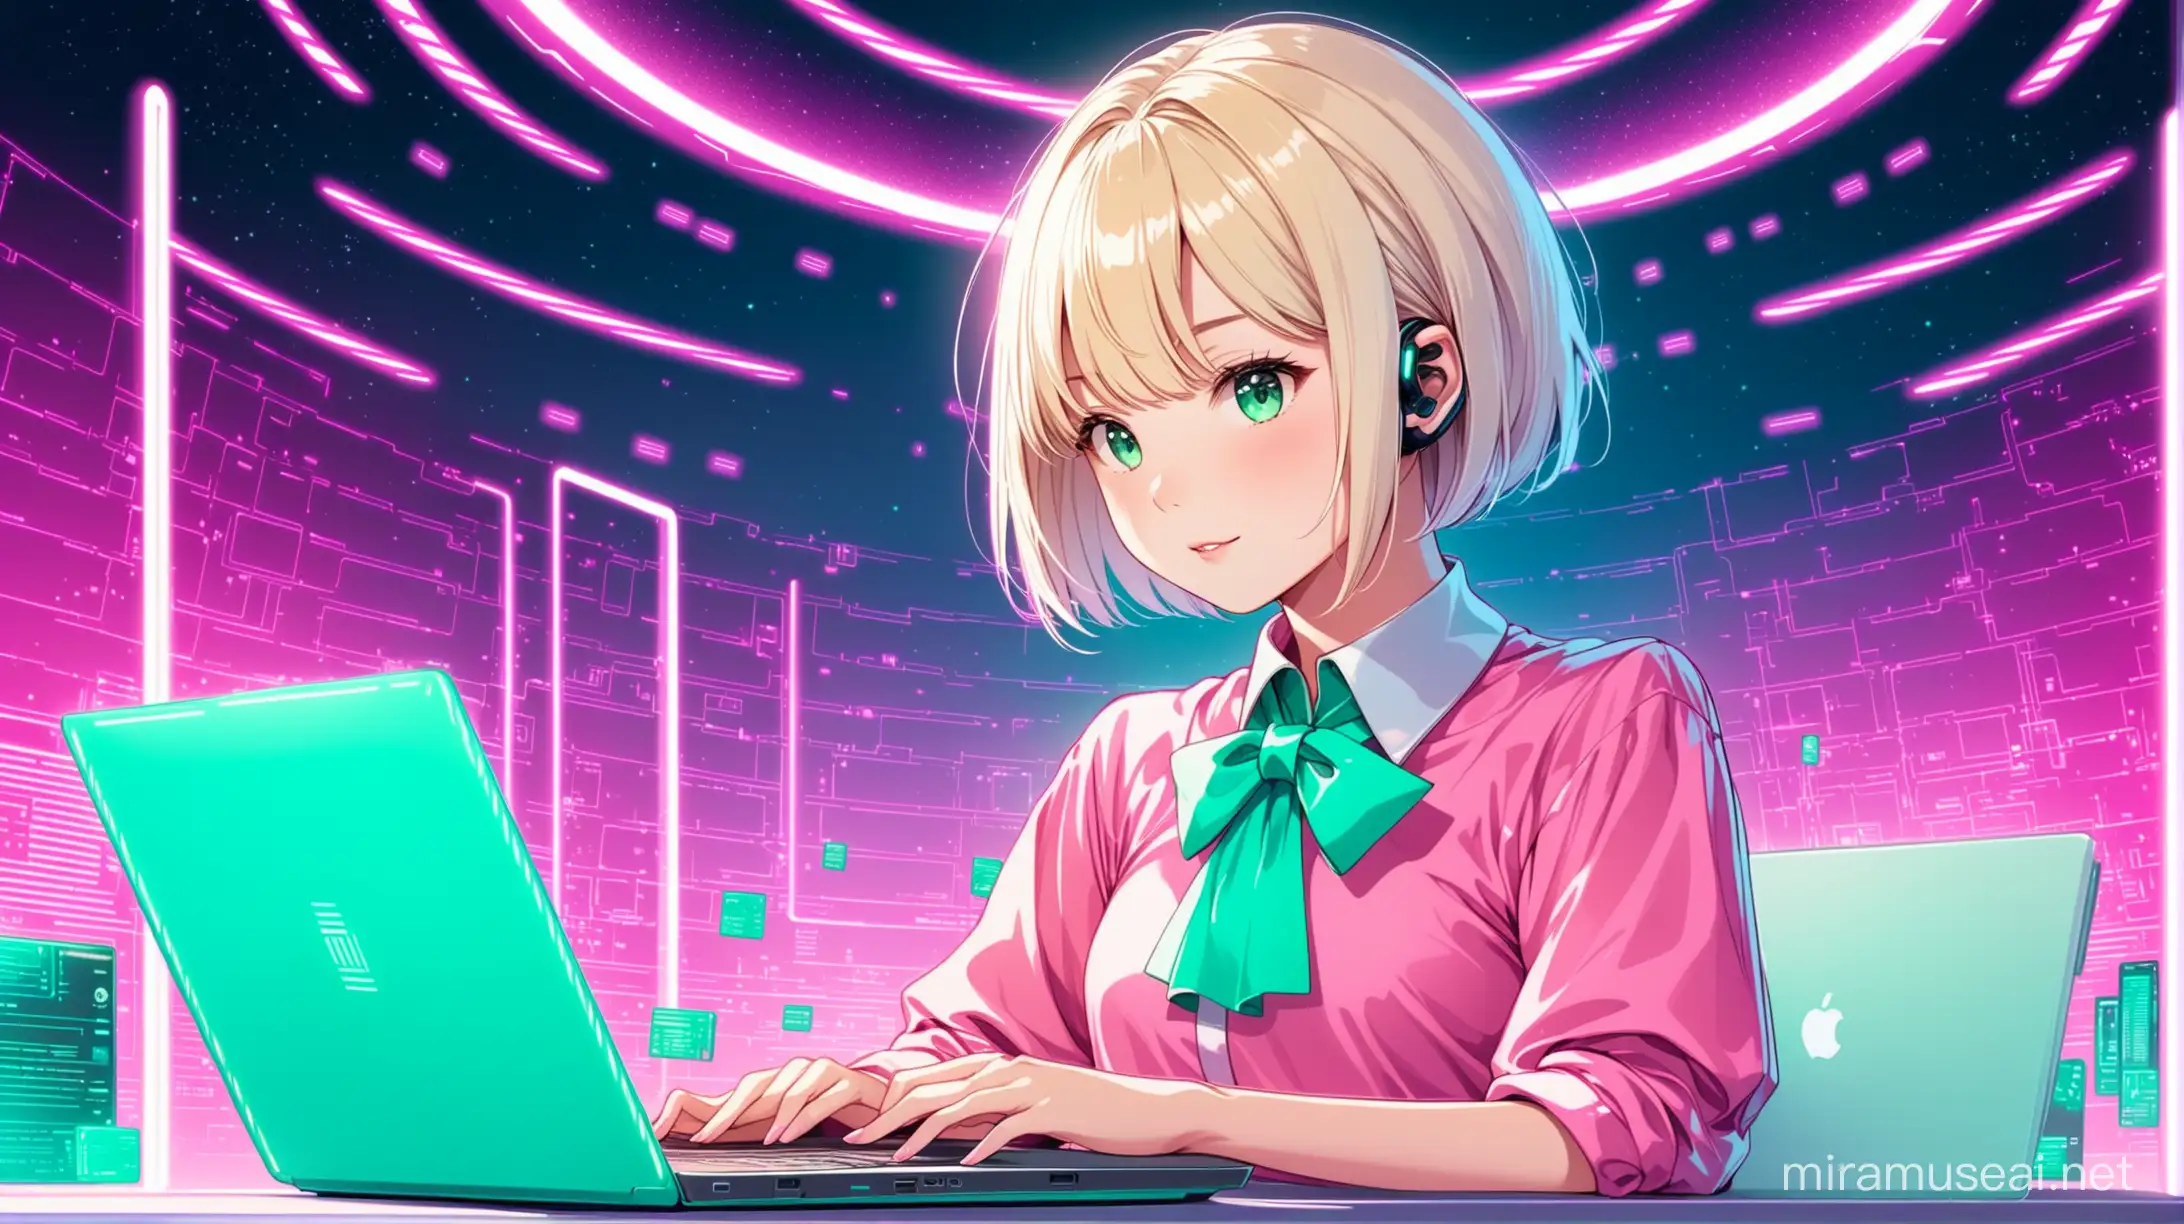 Platinum Blonde Girl in Pink Shirt Working on Laptop in Futuristic Setting